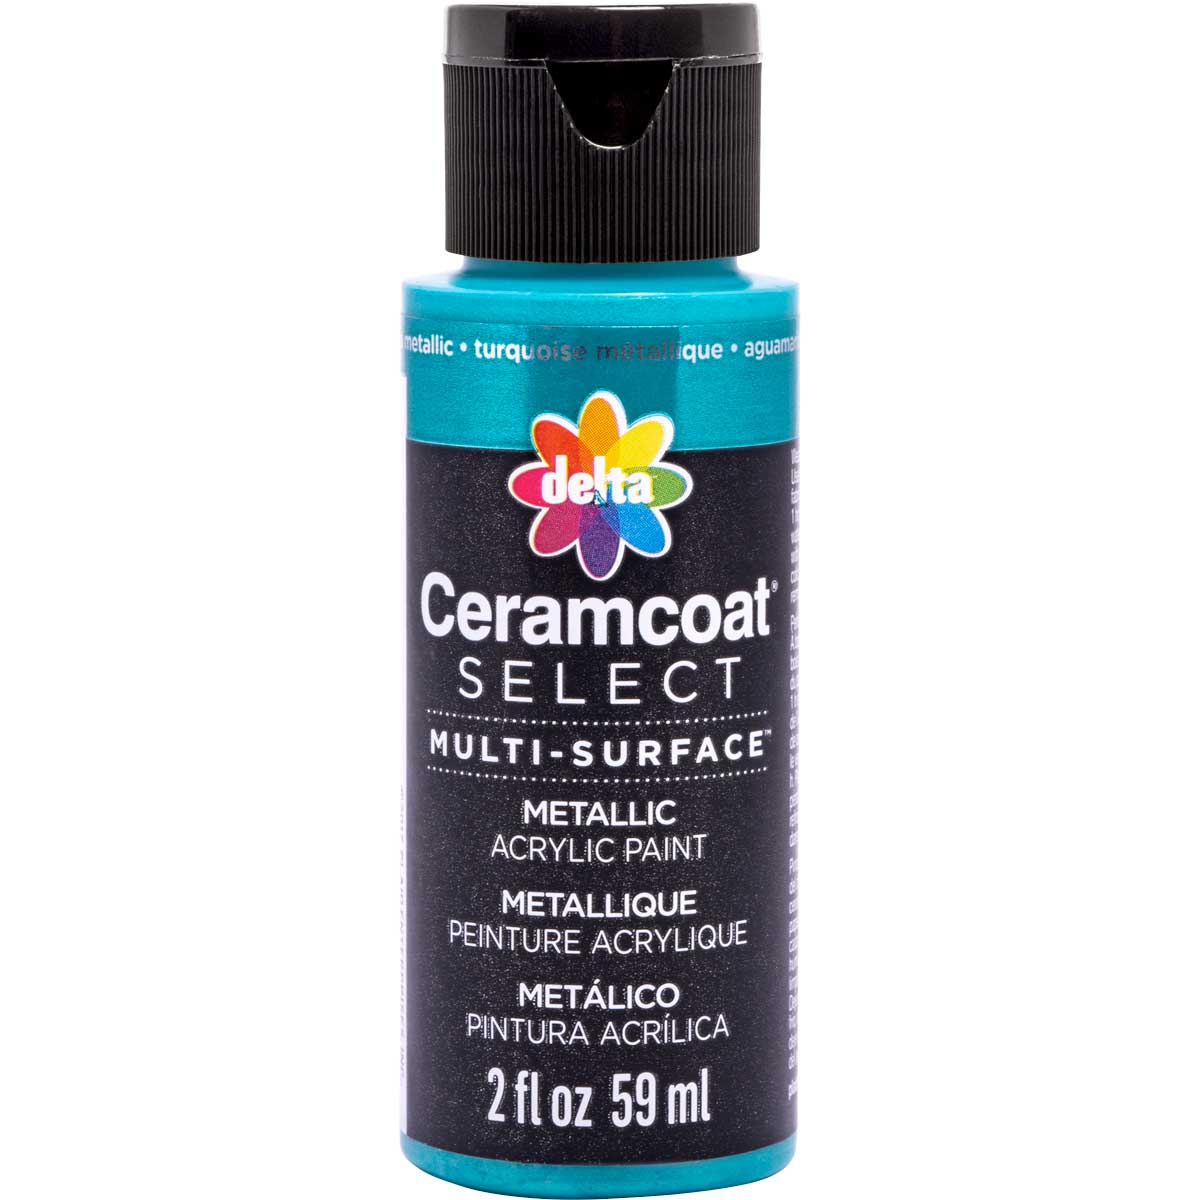 Delta Ceramcoat ® Select Multi-Surface Acrylic Paint - Metallic - Aqua, 2 oz. - 04103